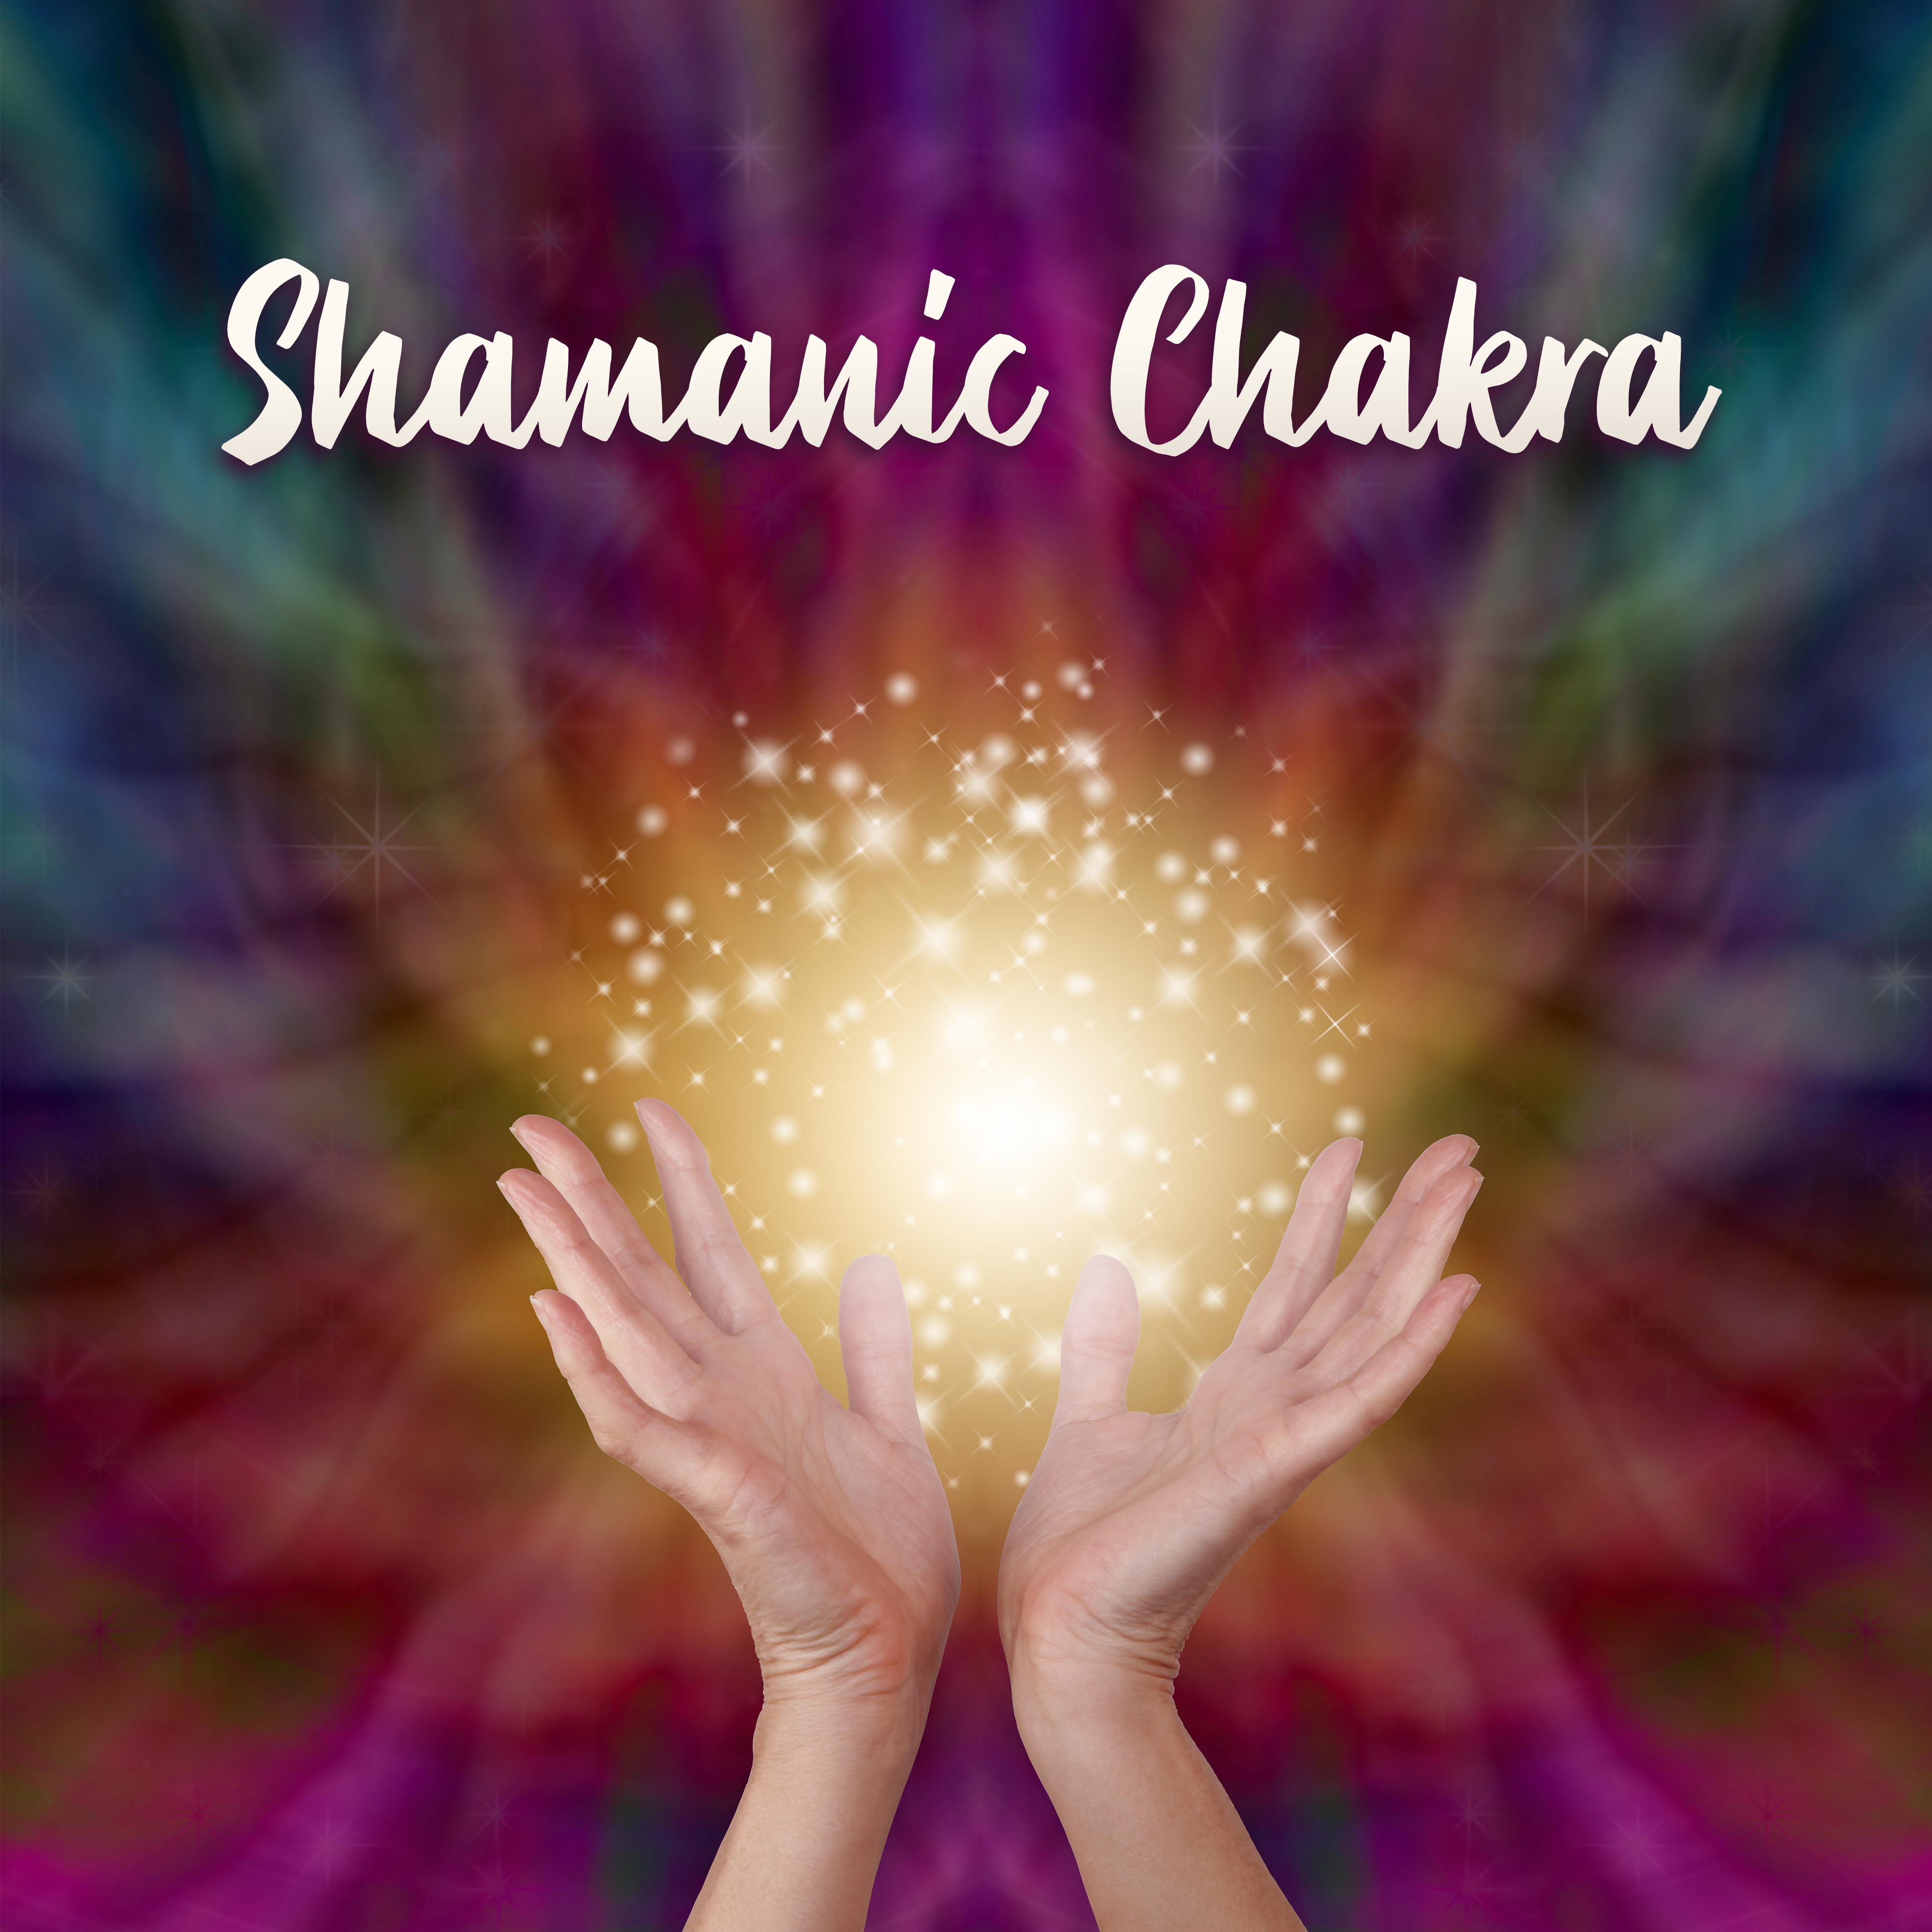 Shamanic Chakra  Indian Healing Music, Deep Harmony, Nature Sounds for Relaxation, African Melodies for Meditation, Yoga, Spiritual Awakening